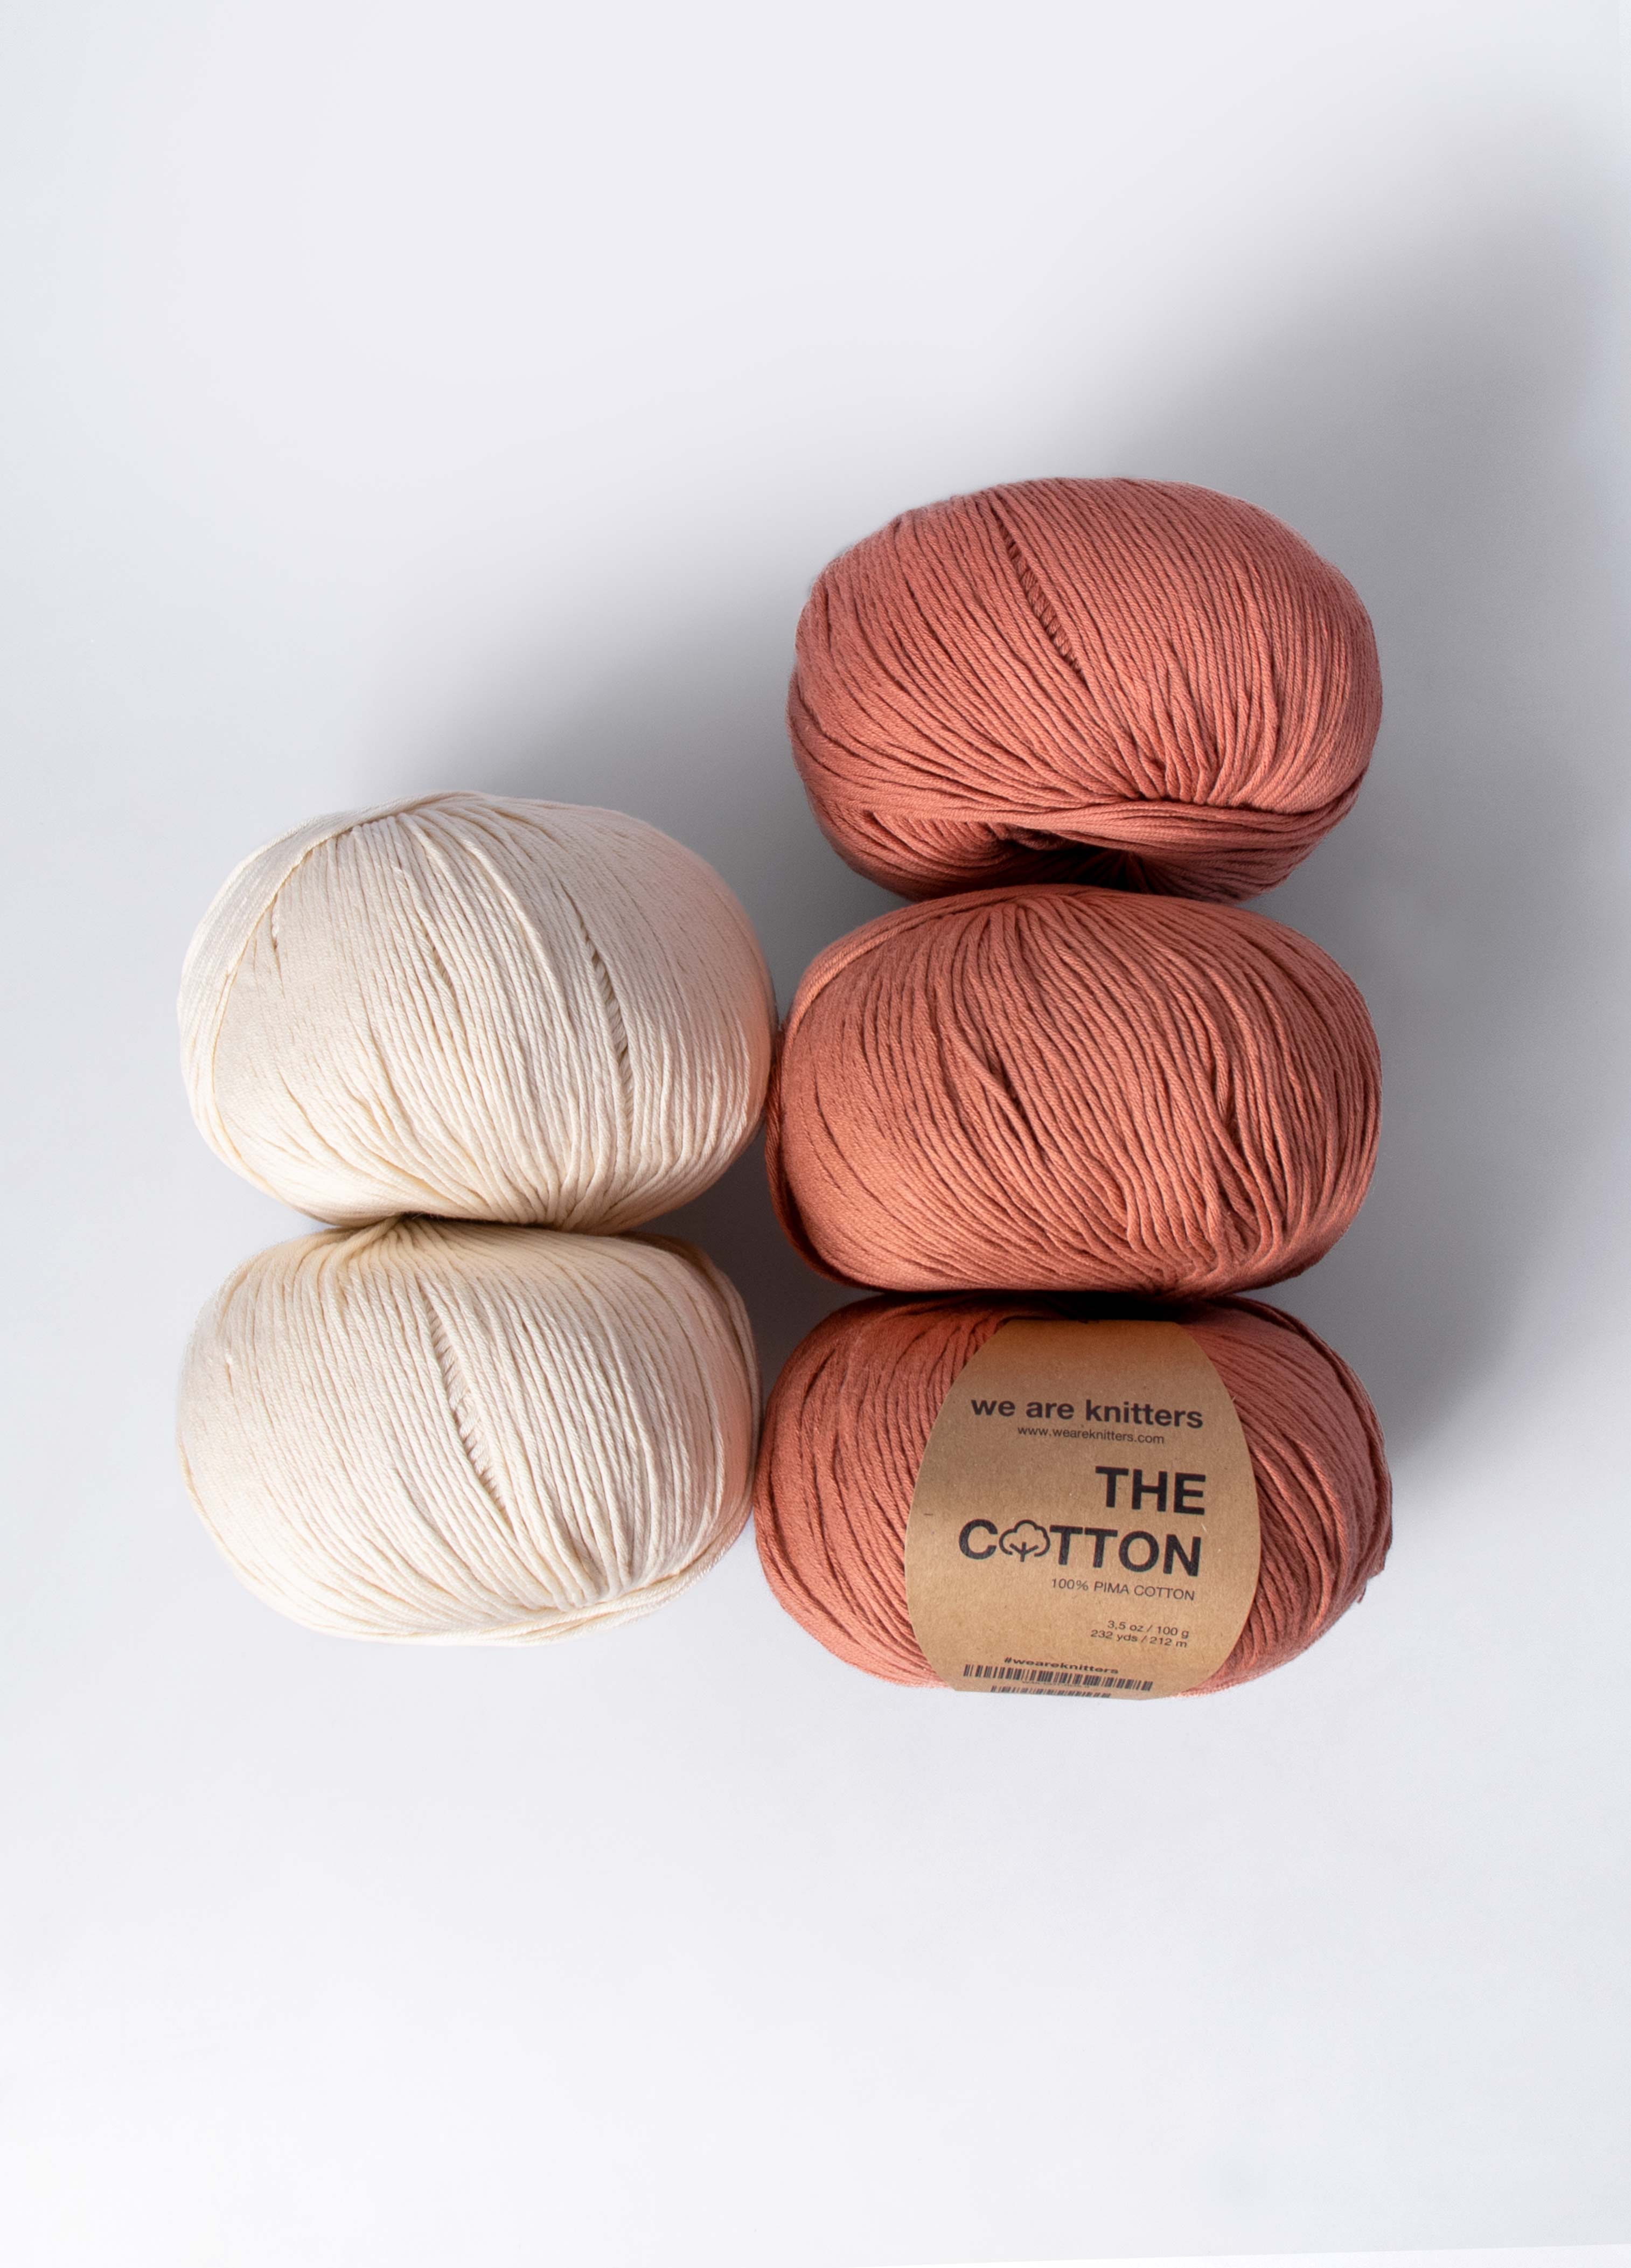 Sky Blue Cotton Yarn for Knitting Crocheting Machine Knitting, 100g /3,5 Oz  